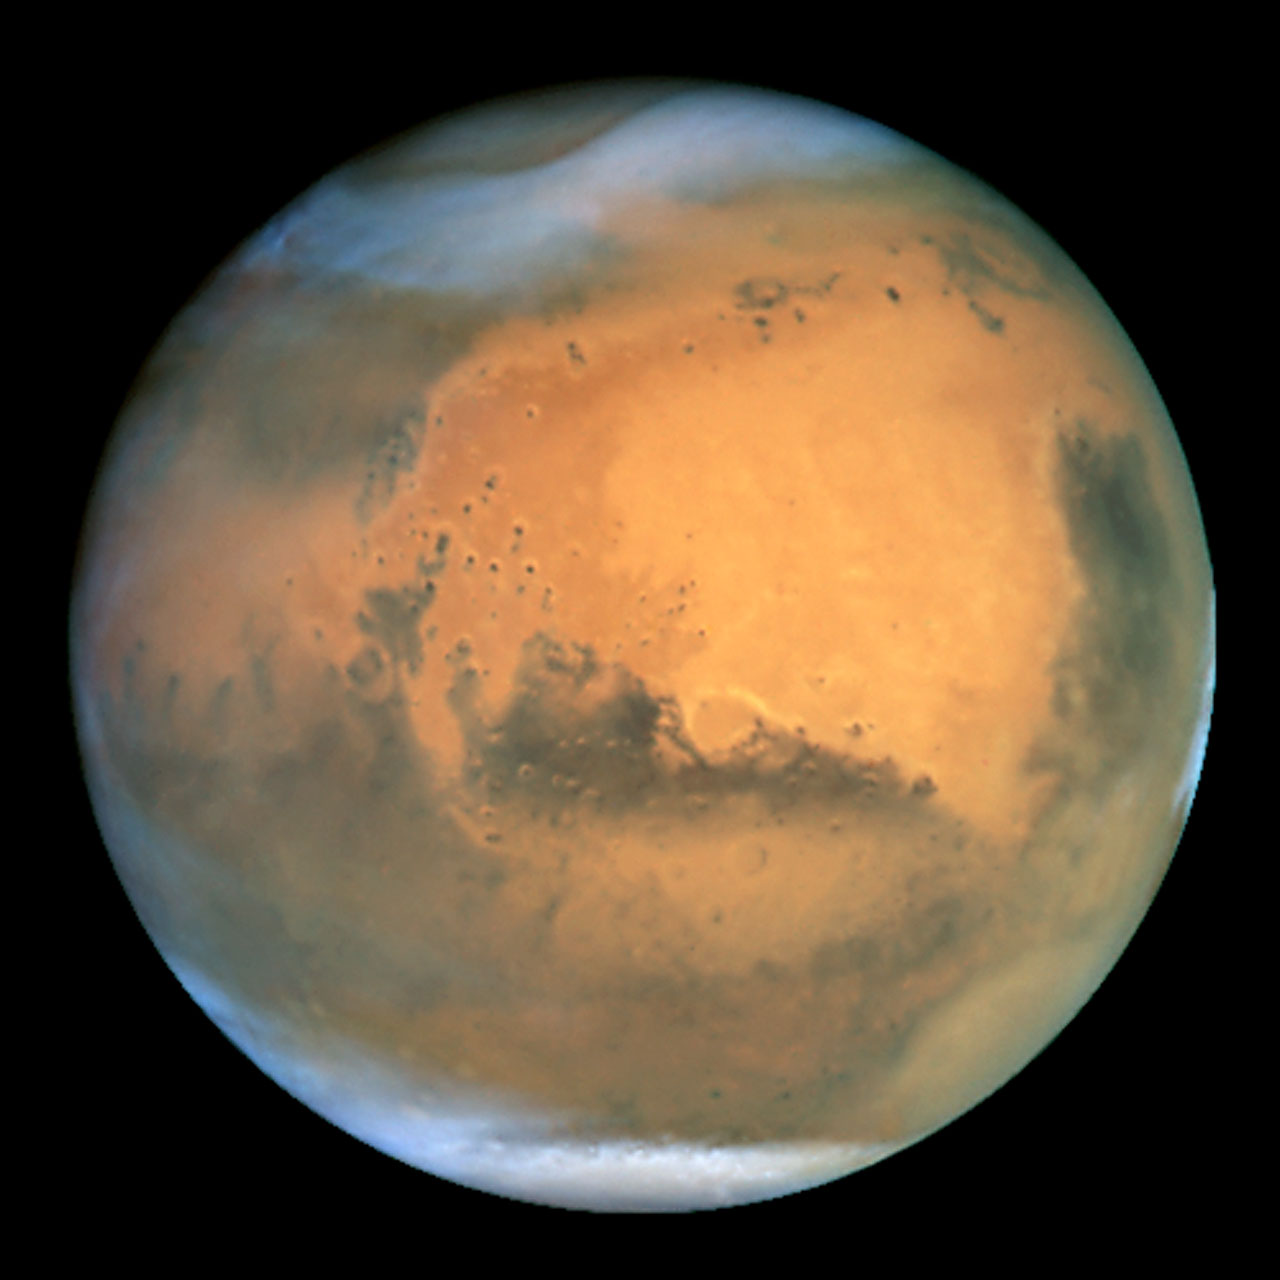 The Mars Exploration Family Portrait